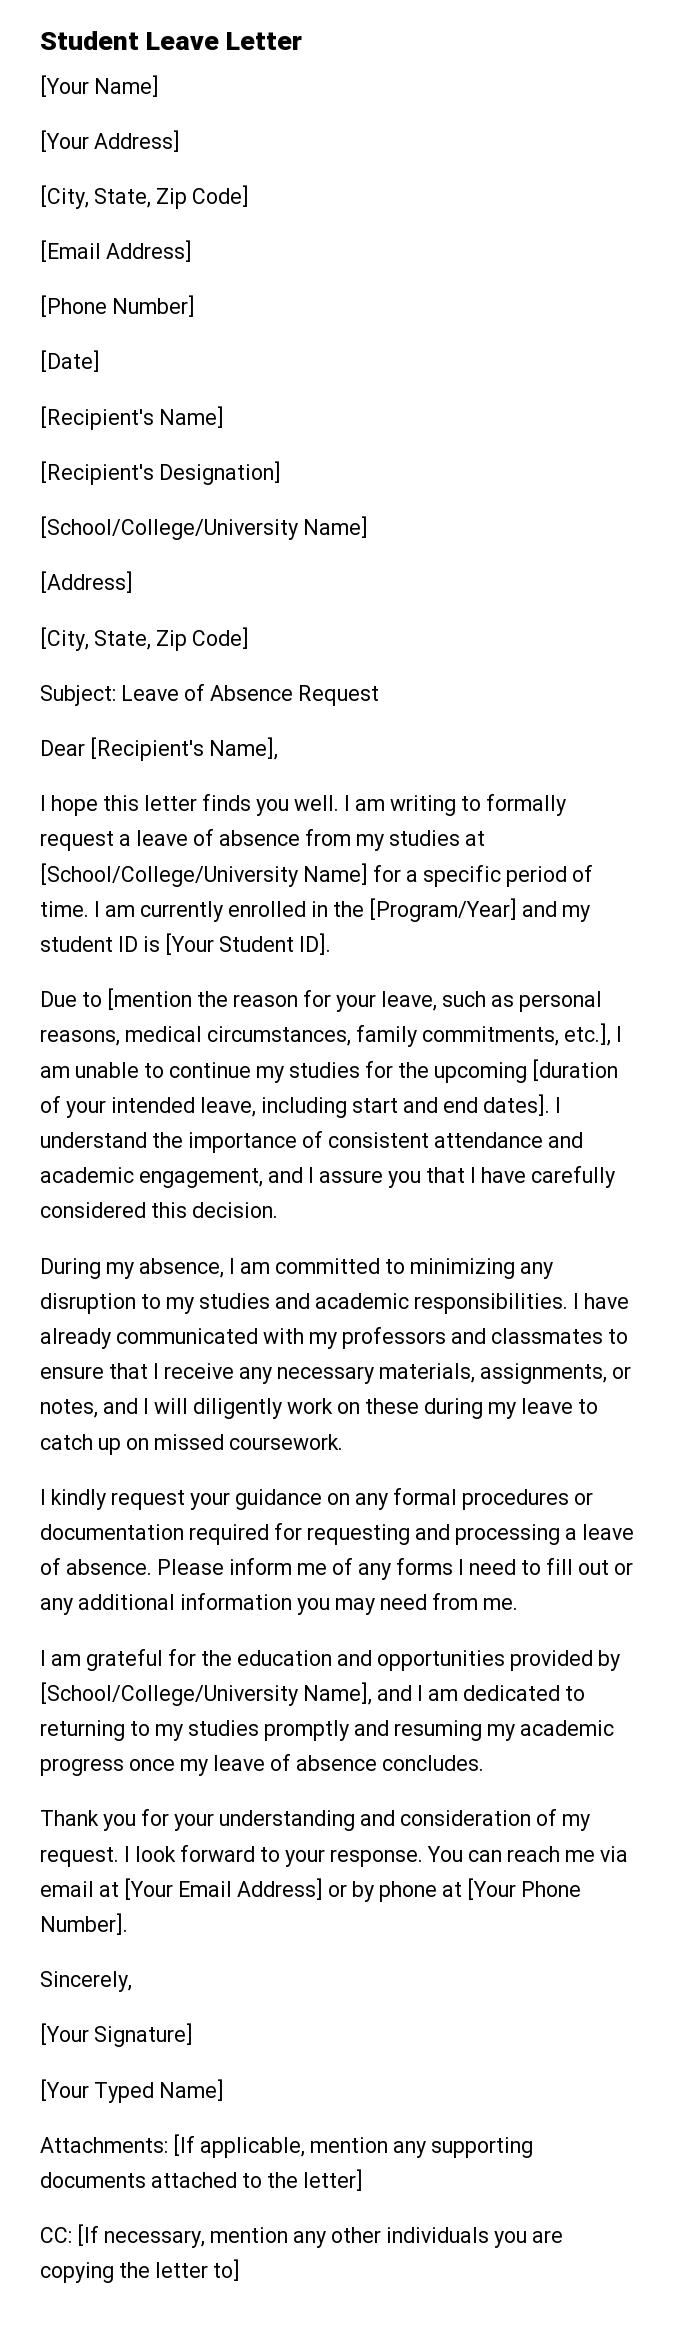 Student Leave Letter